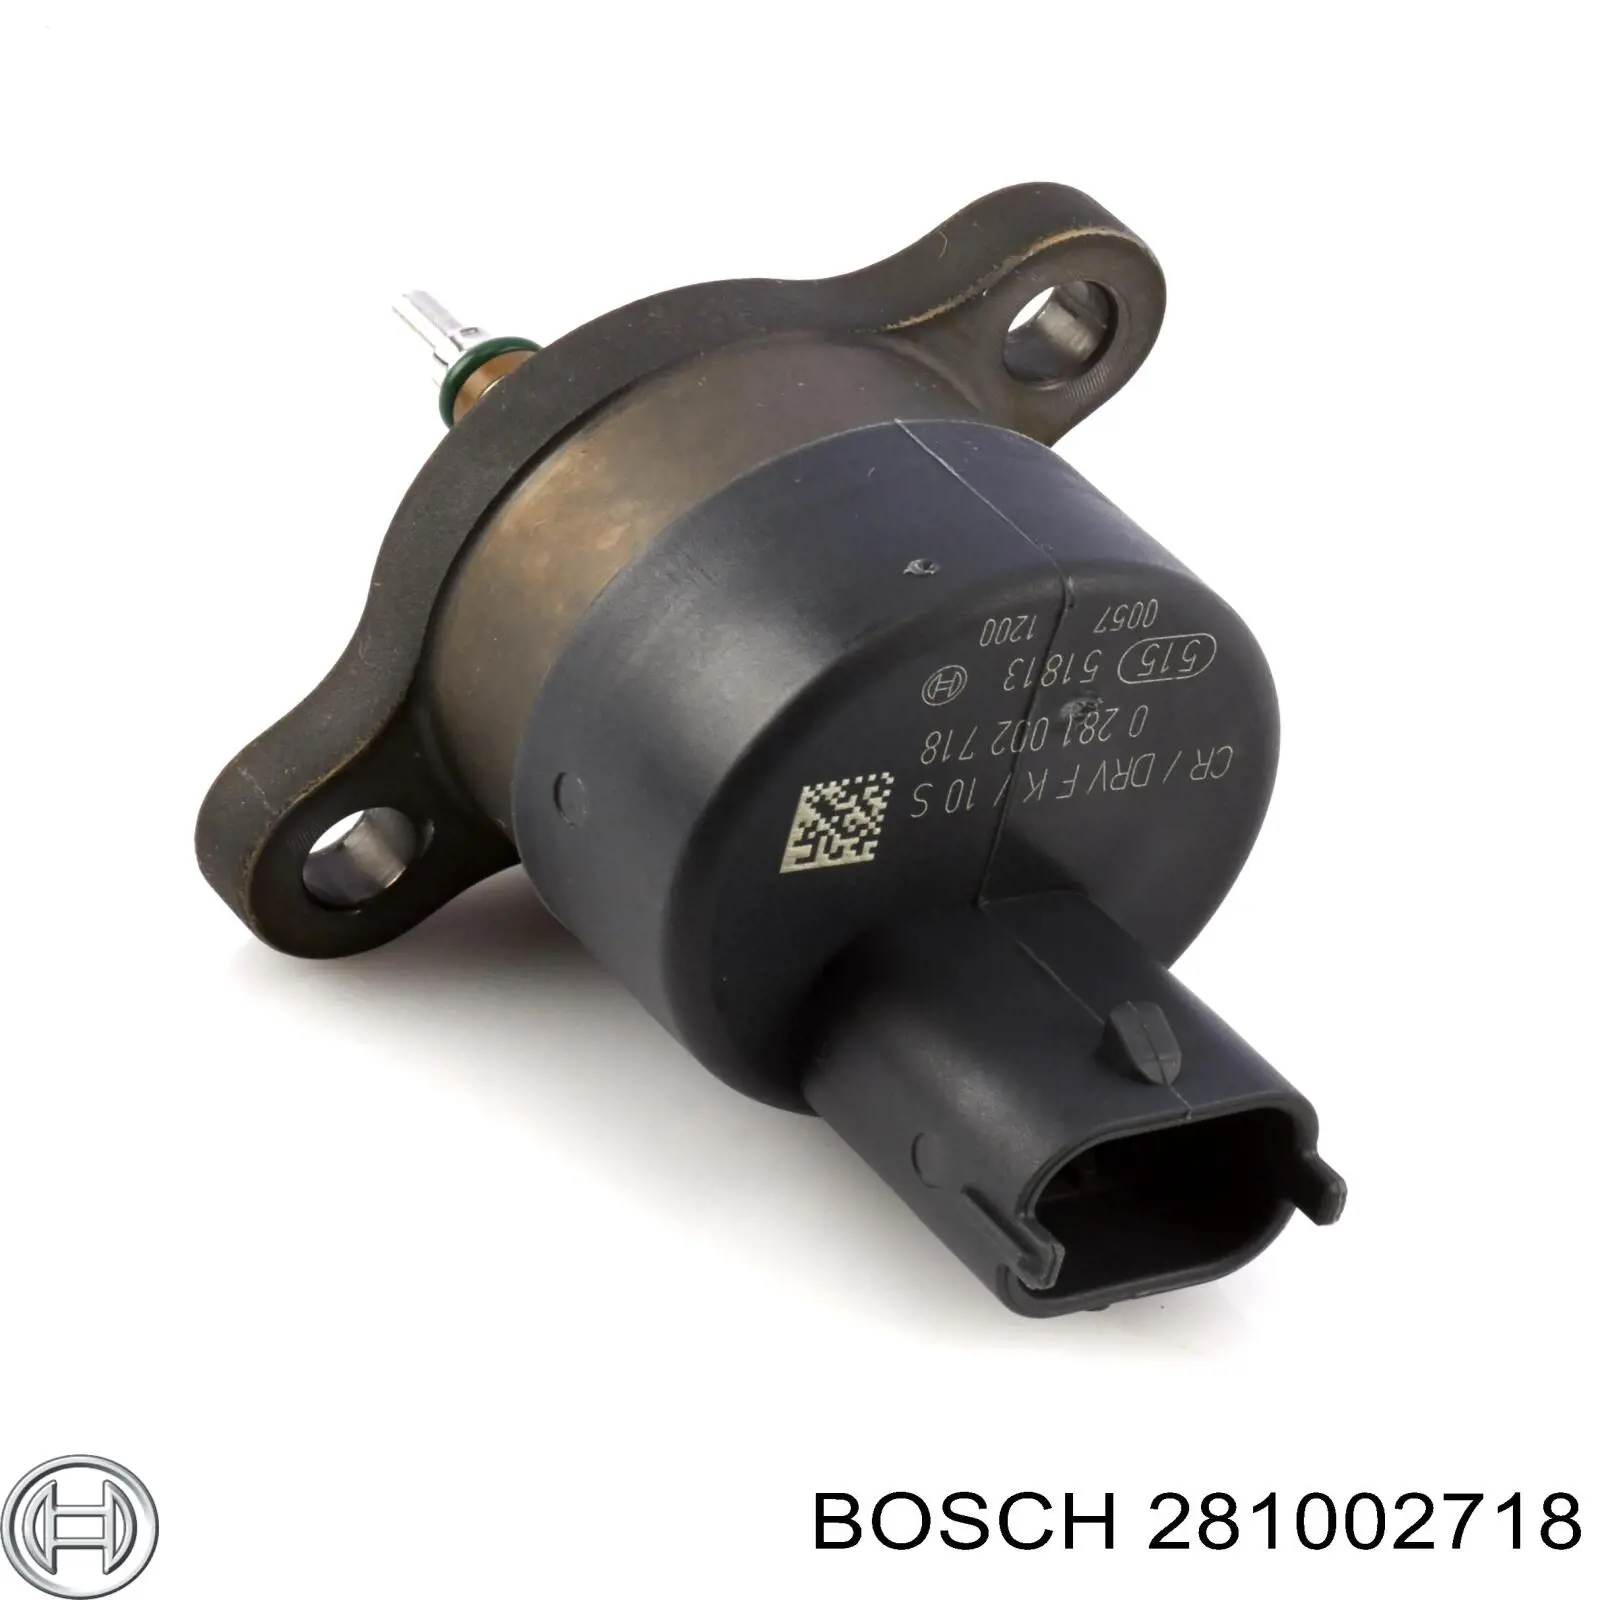 281002718 Bosch regulador de presión de combustible